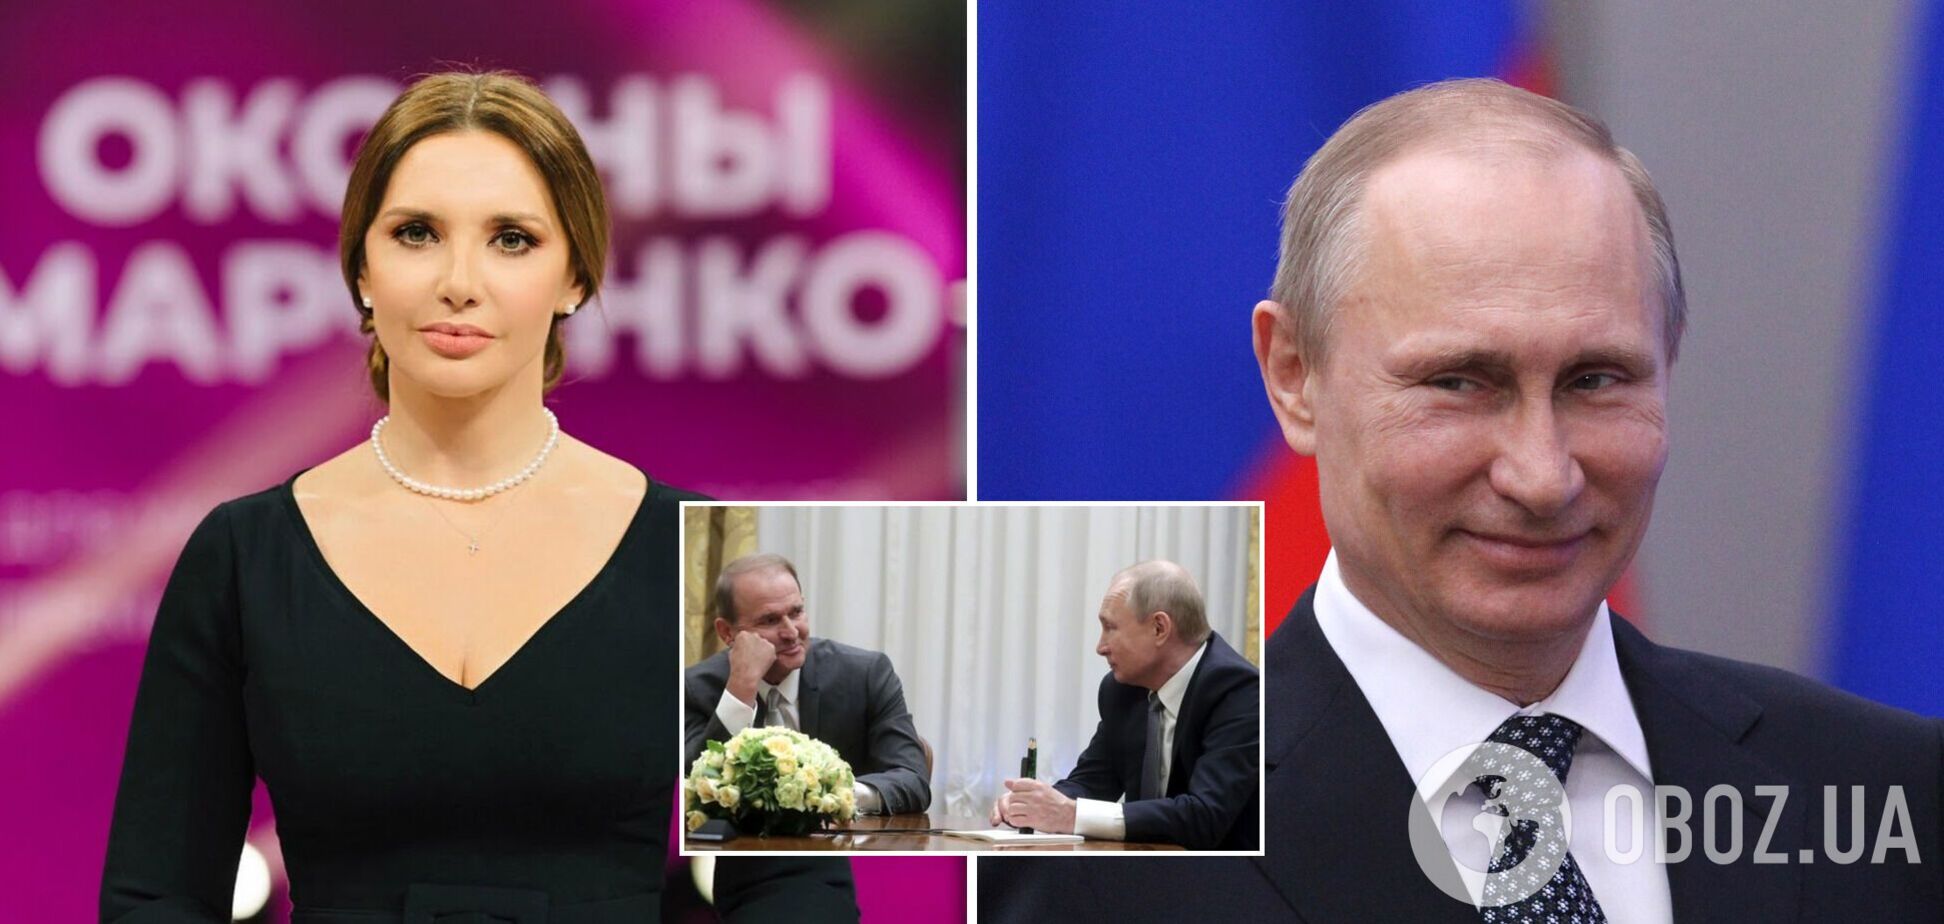 Марченко обратилась к Путину, чтобы тот спас Медведчука. Видео